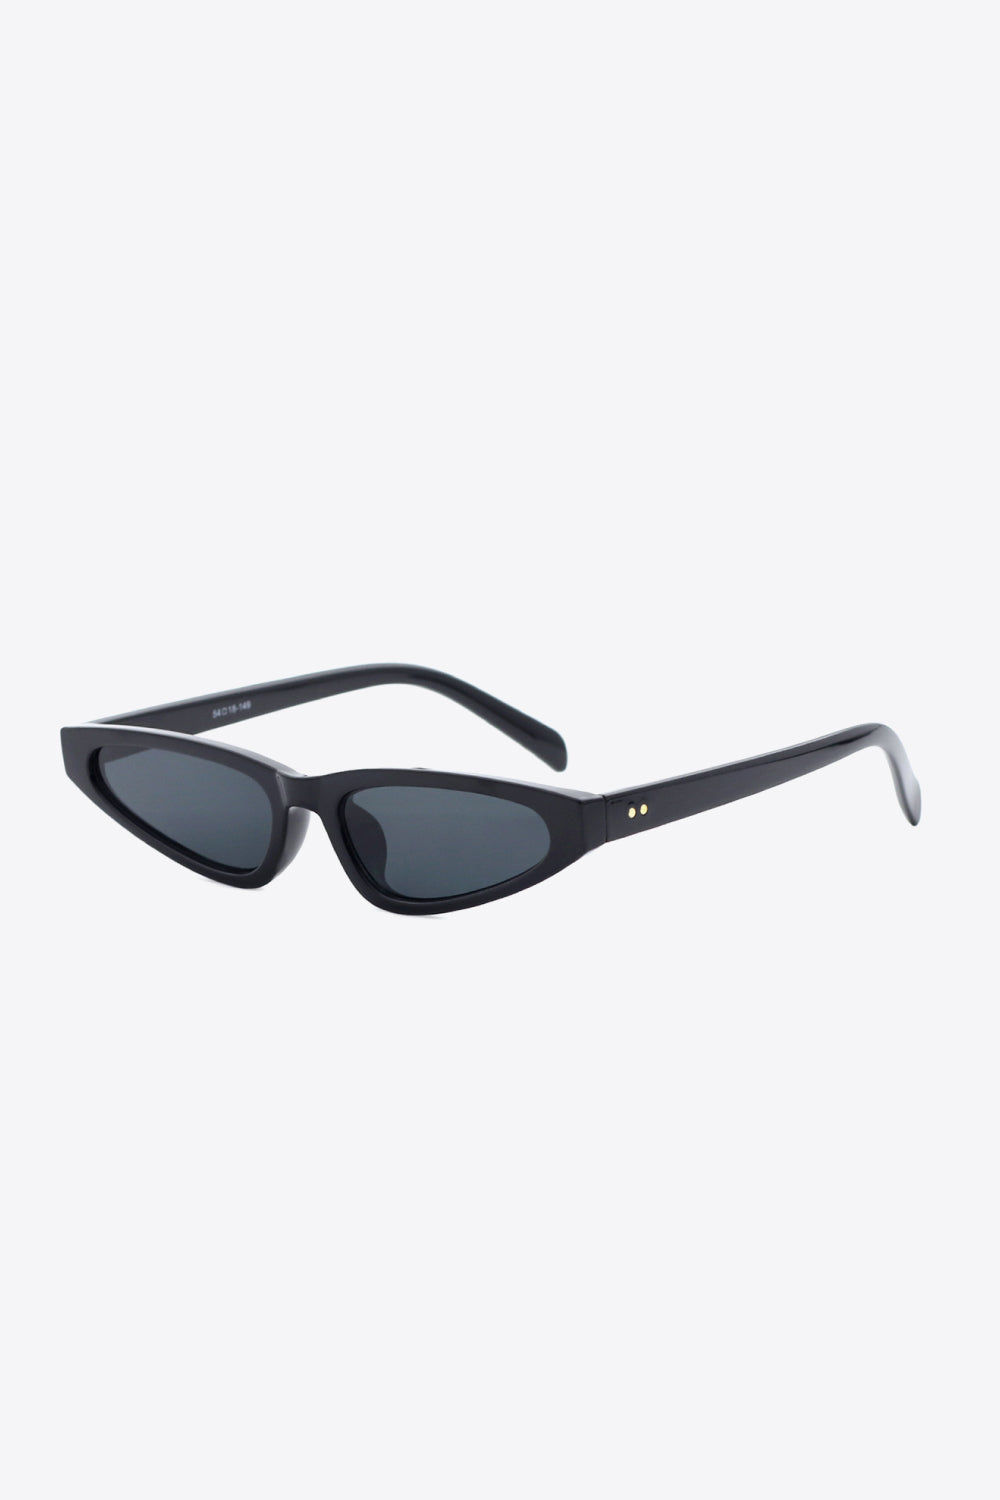 Polycarbonate Frame UV400 Cat Eye Sunglasses - Black / One Size Wynter 4 All Seasons